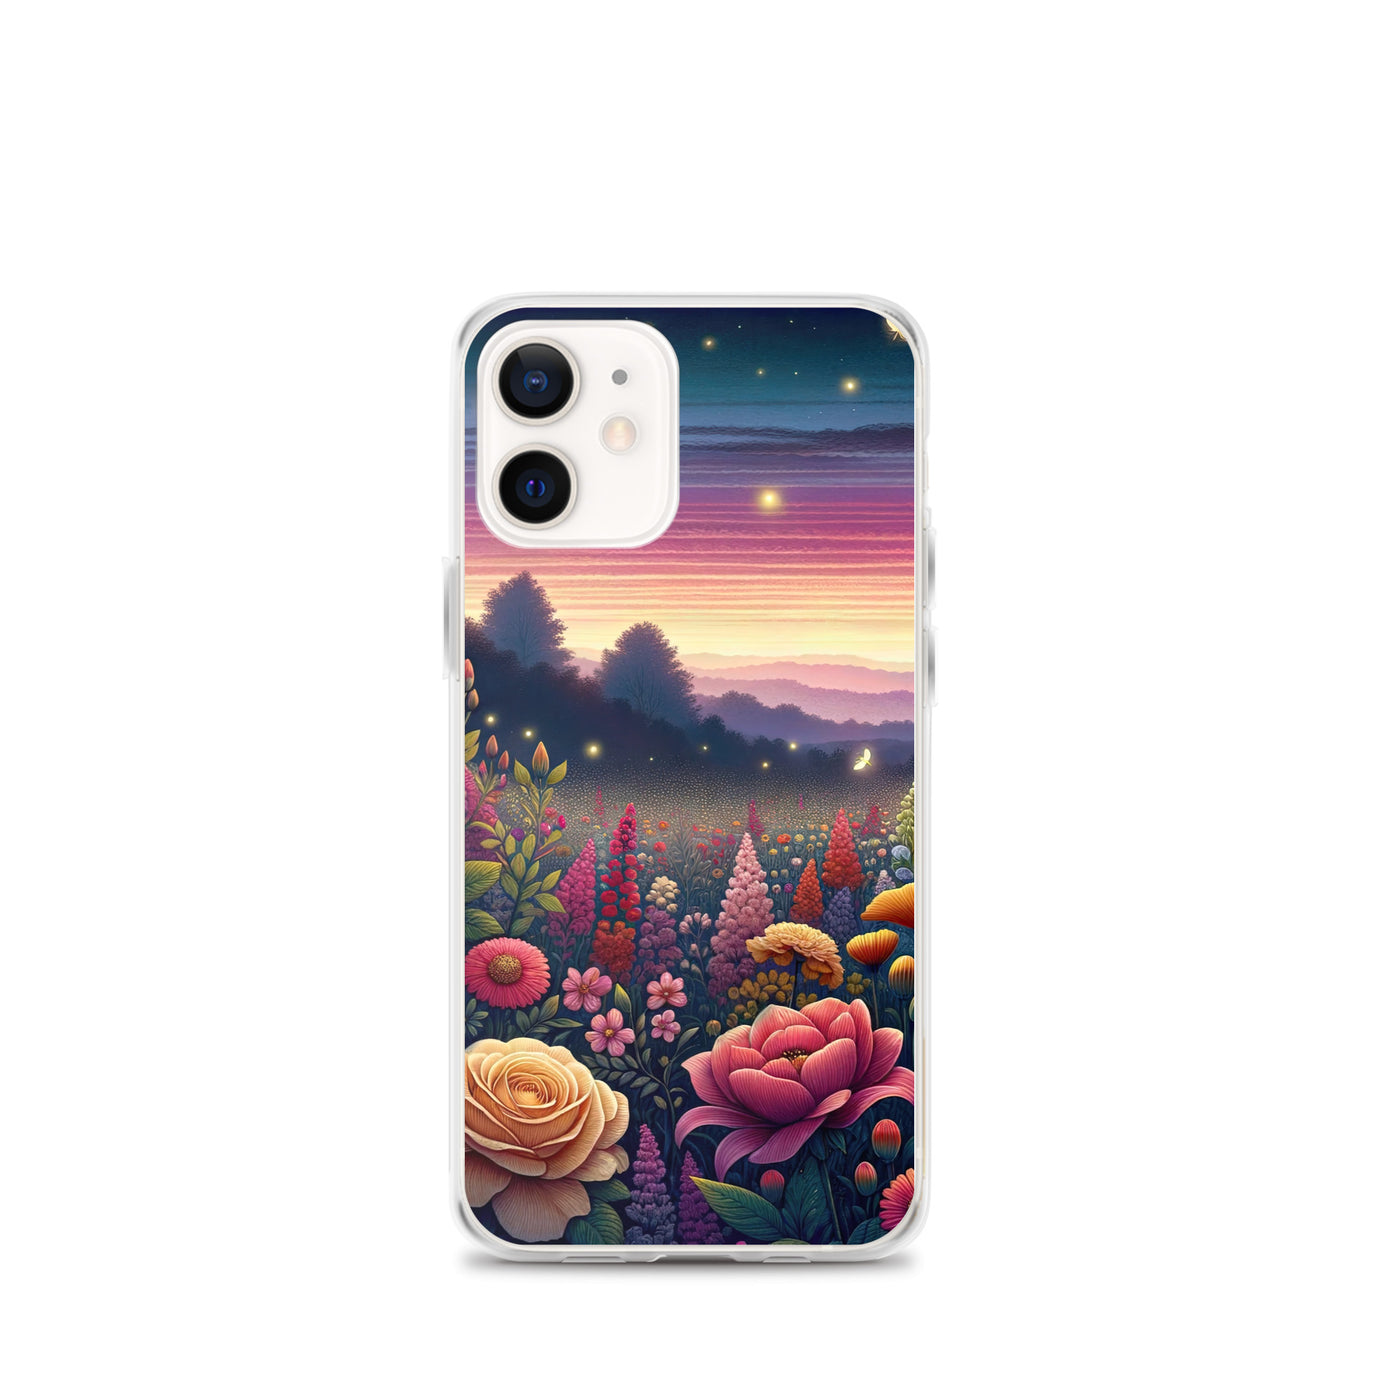 Skurriles Blumenfeld in Dämmerung, farbenfrohe Rosen, Lilien, Ringelblumen - iPhone Schutzhülle (durchsichtig) camping xxx yyy zzz iPhone 12 mini